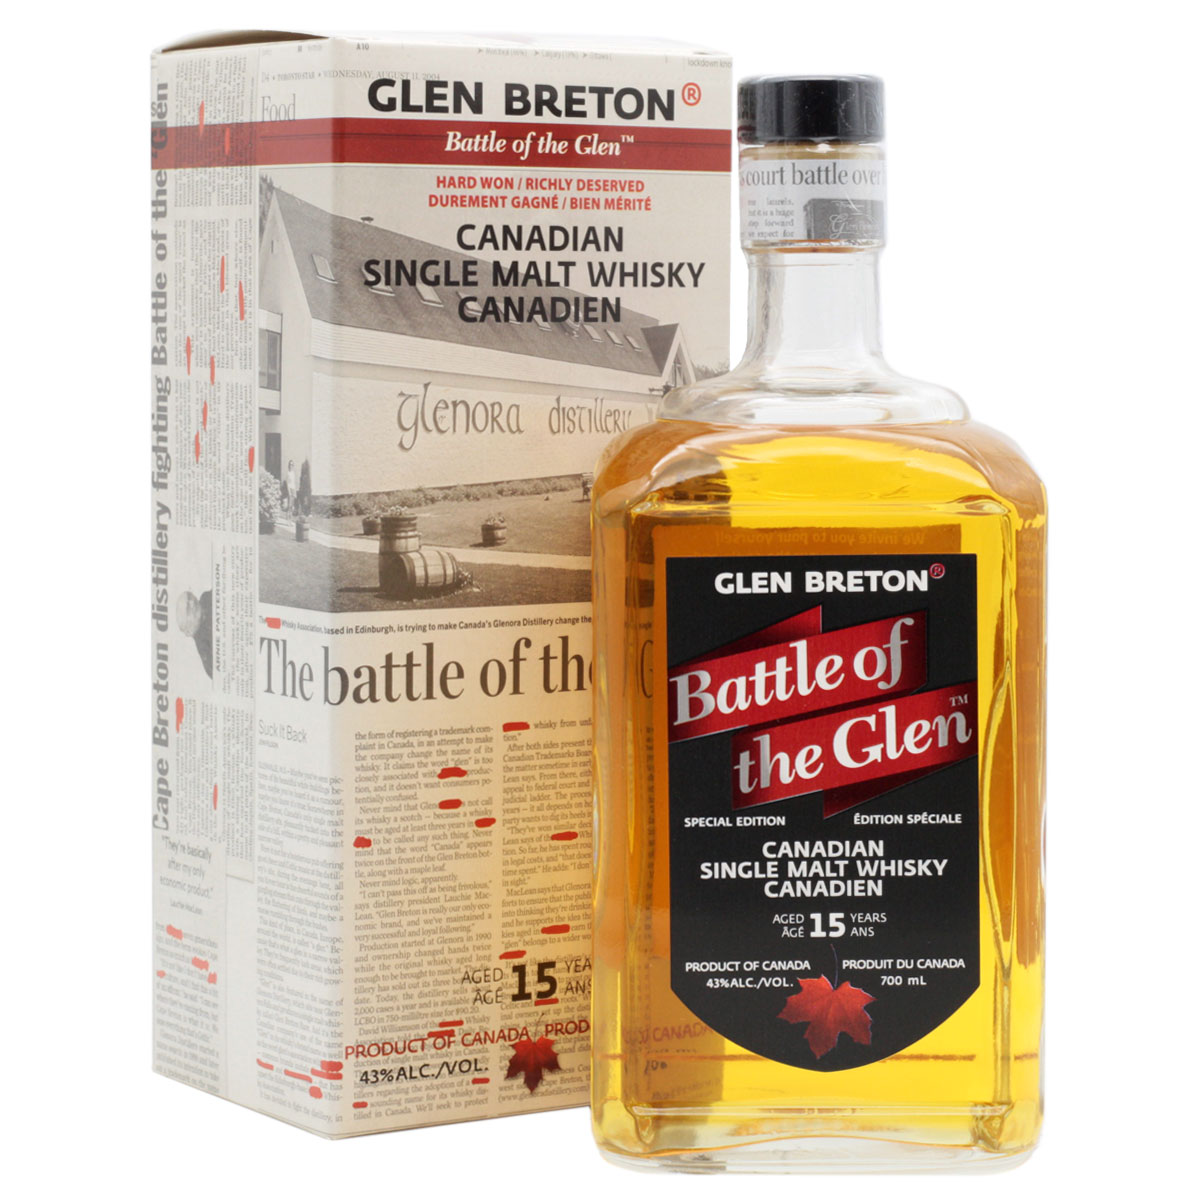 Limited Edition Whisky aus Kanada: Glen Breton 15 Years Battle of the Glen